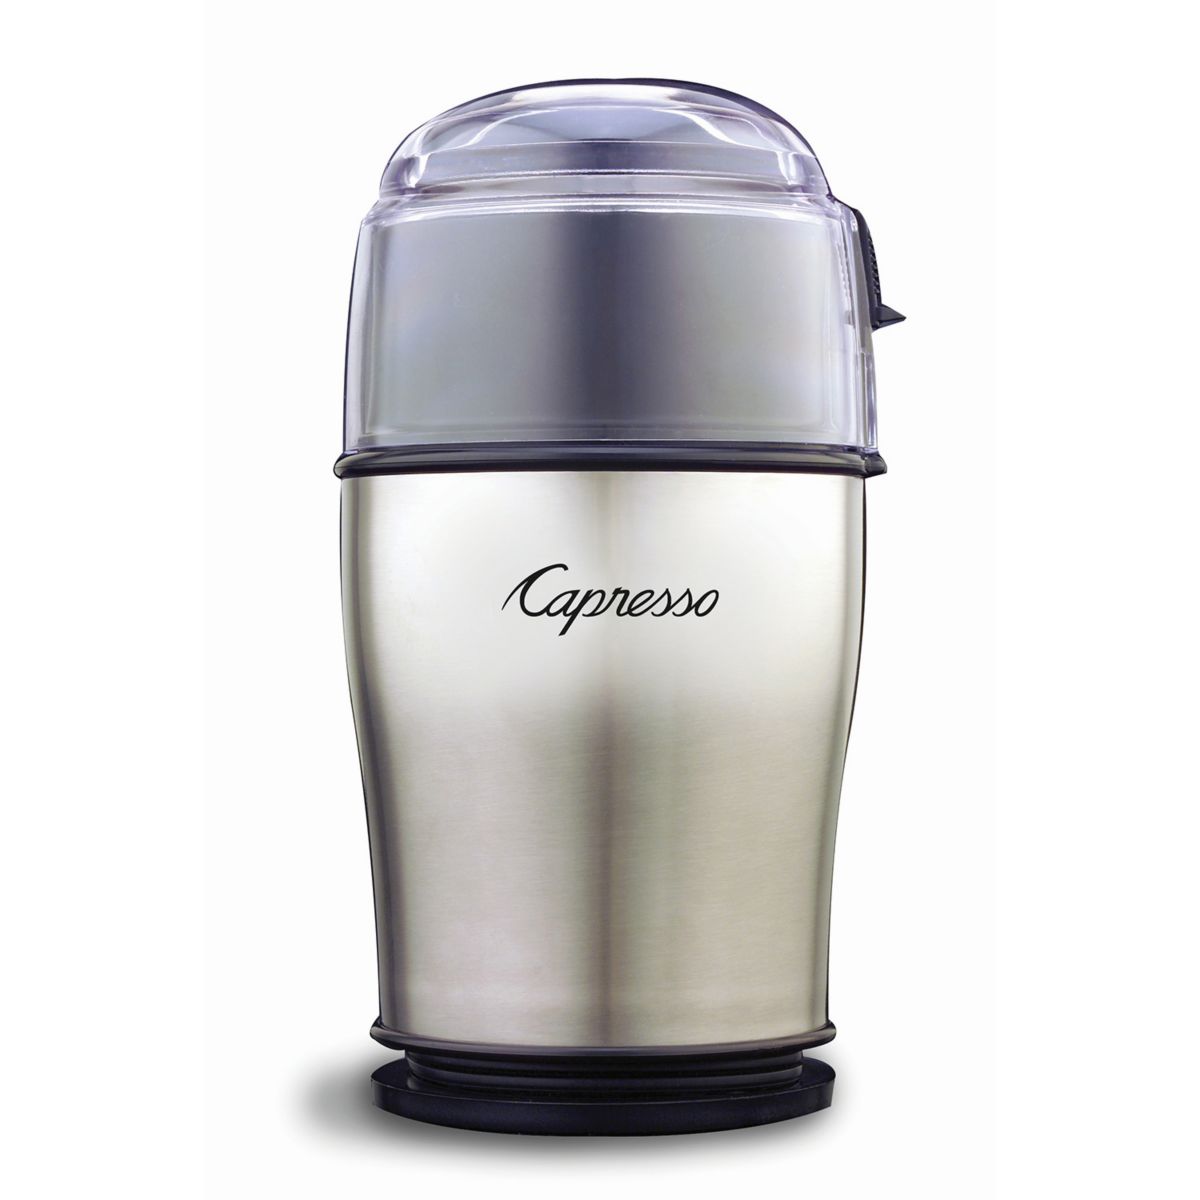 Capresso Cool Grind Pro Мельница для кофе и специй Capresso